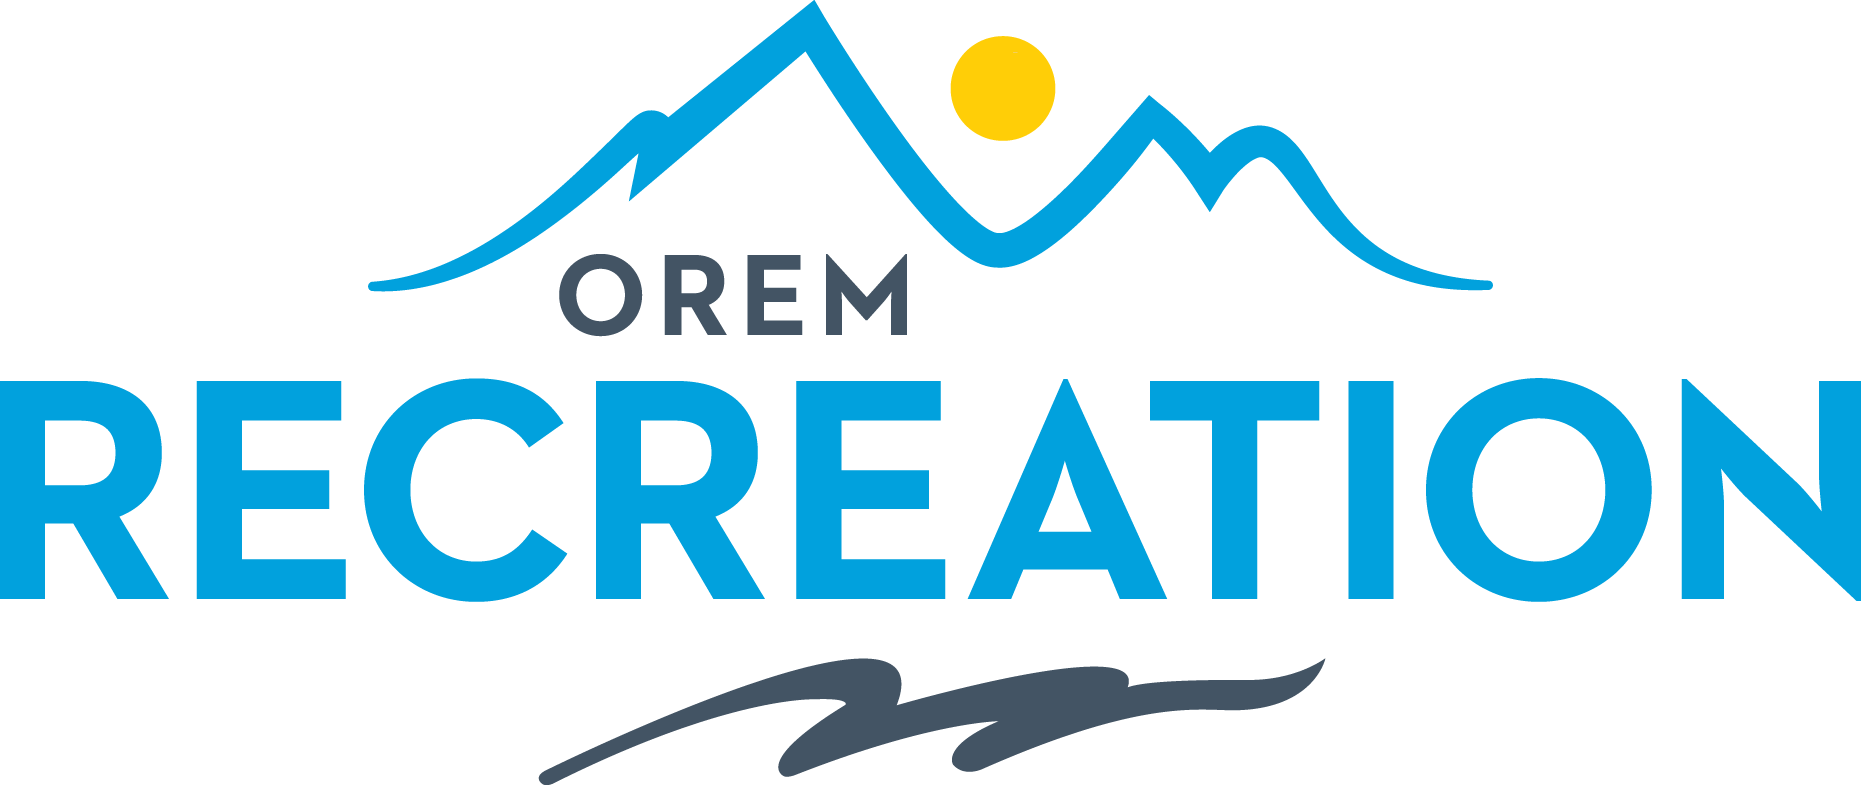 Recreation Logo - Orem Recreation